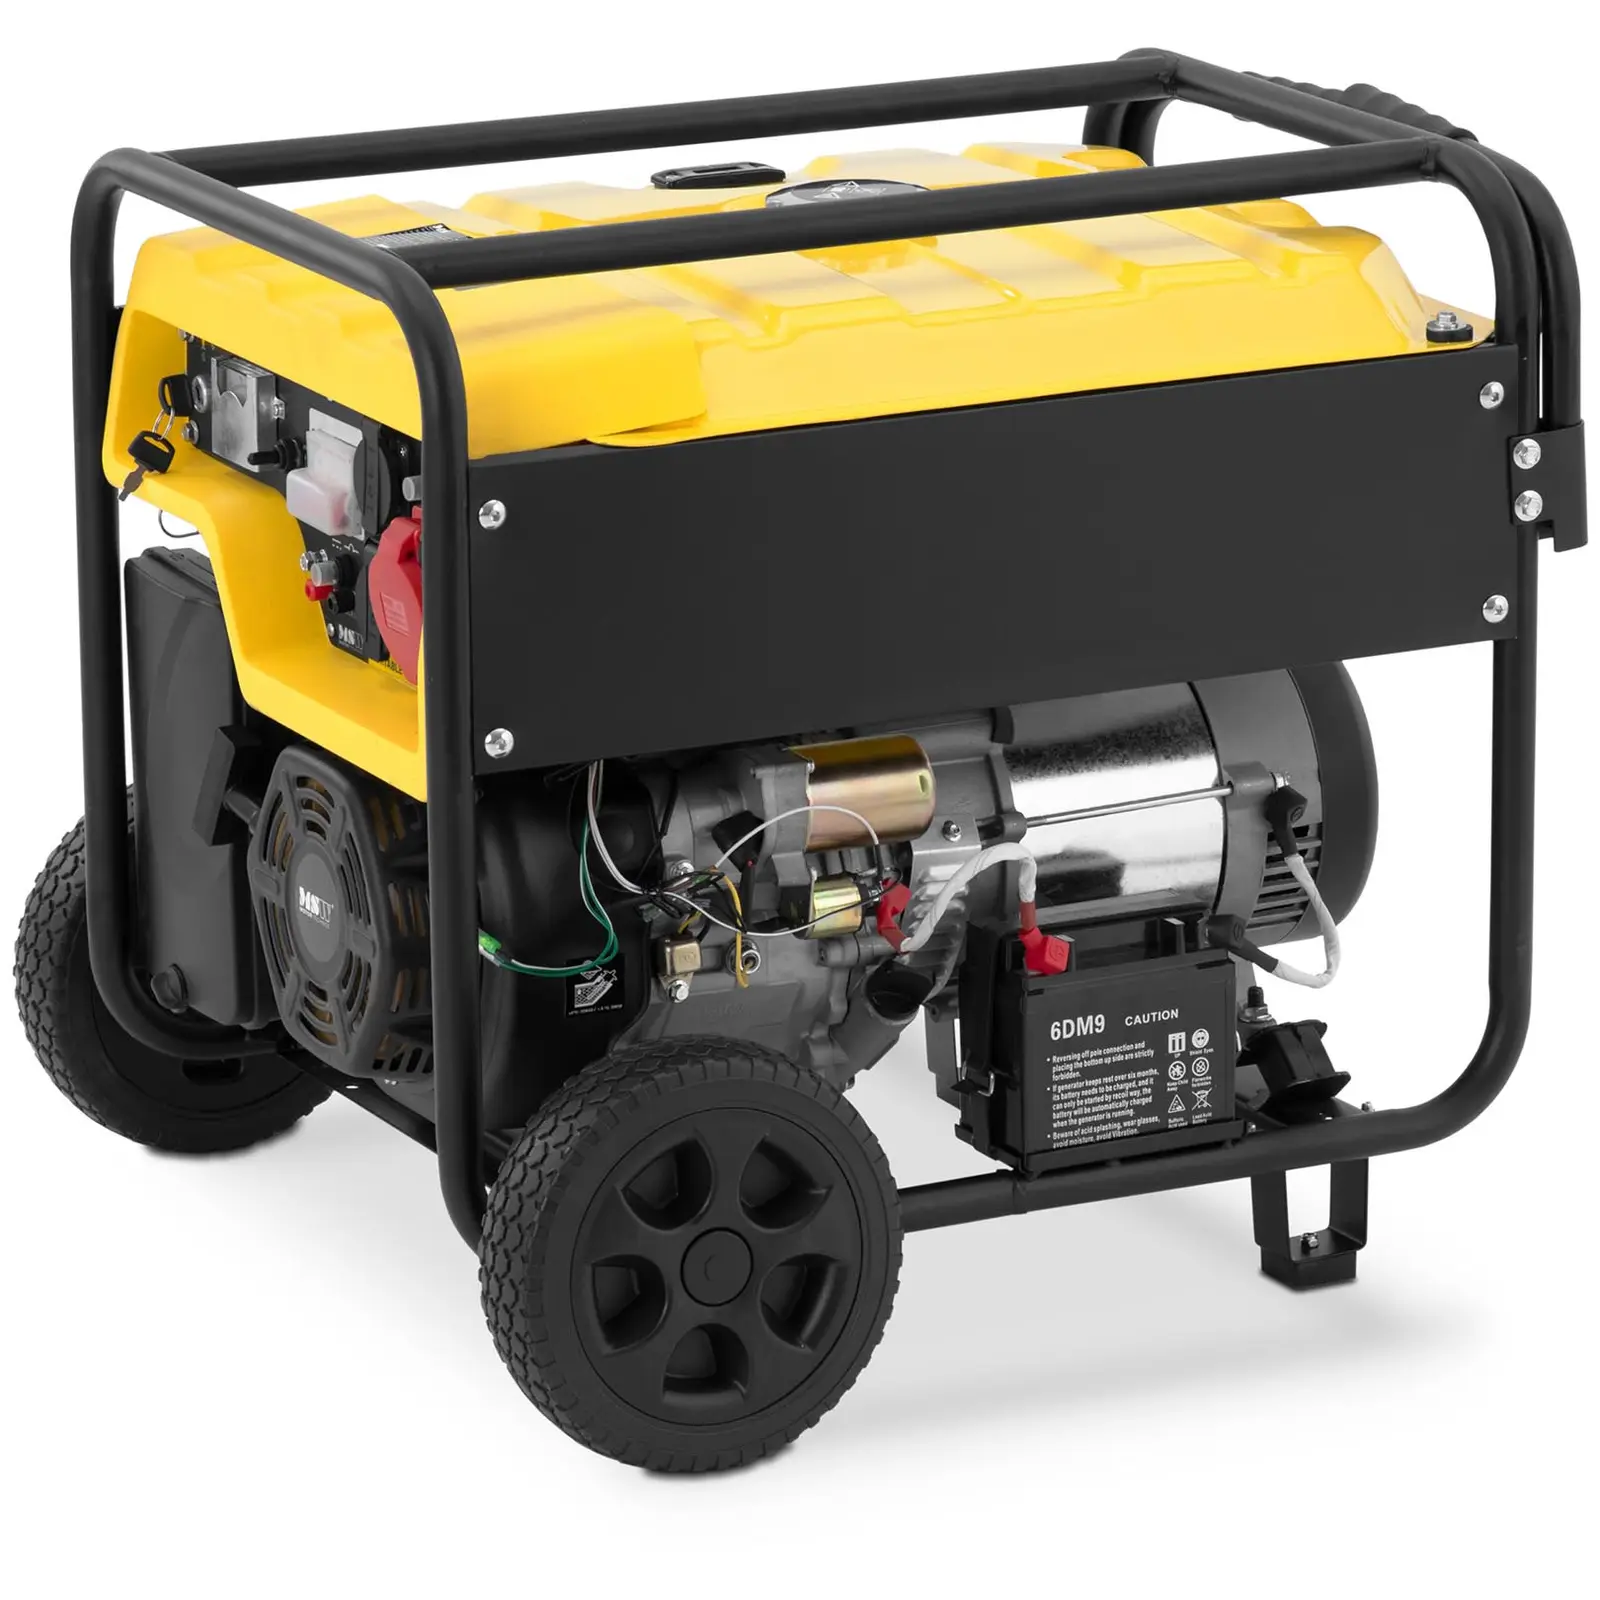 Petrol generator - 5500 W - 400 V AC / 230 V AC / 12 V DC - tank 28 l - manual start/electric